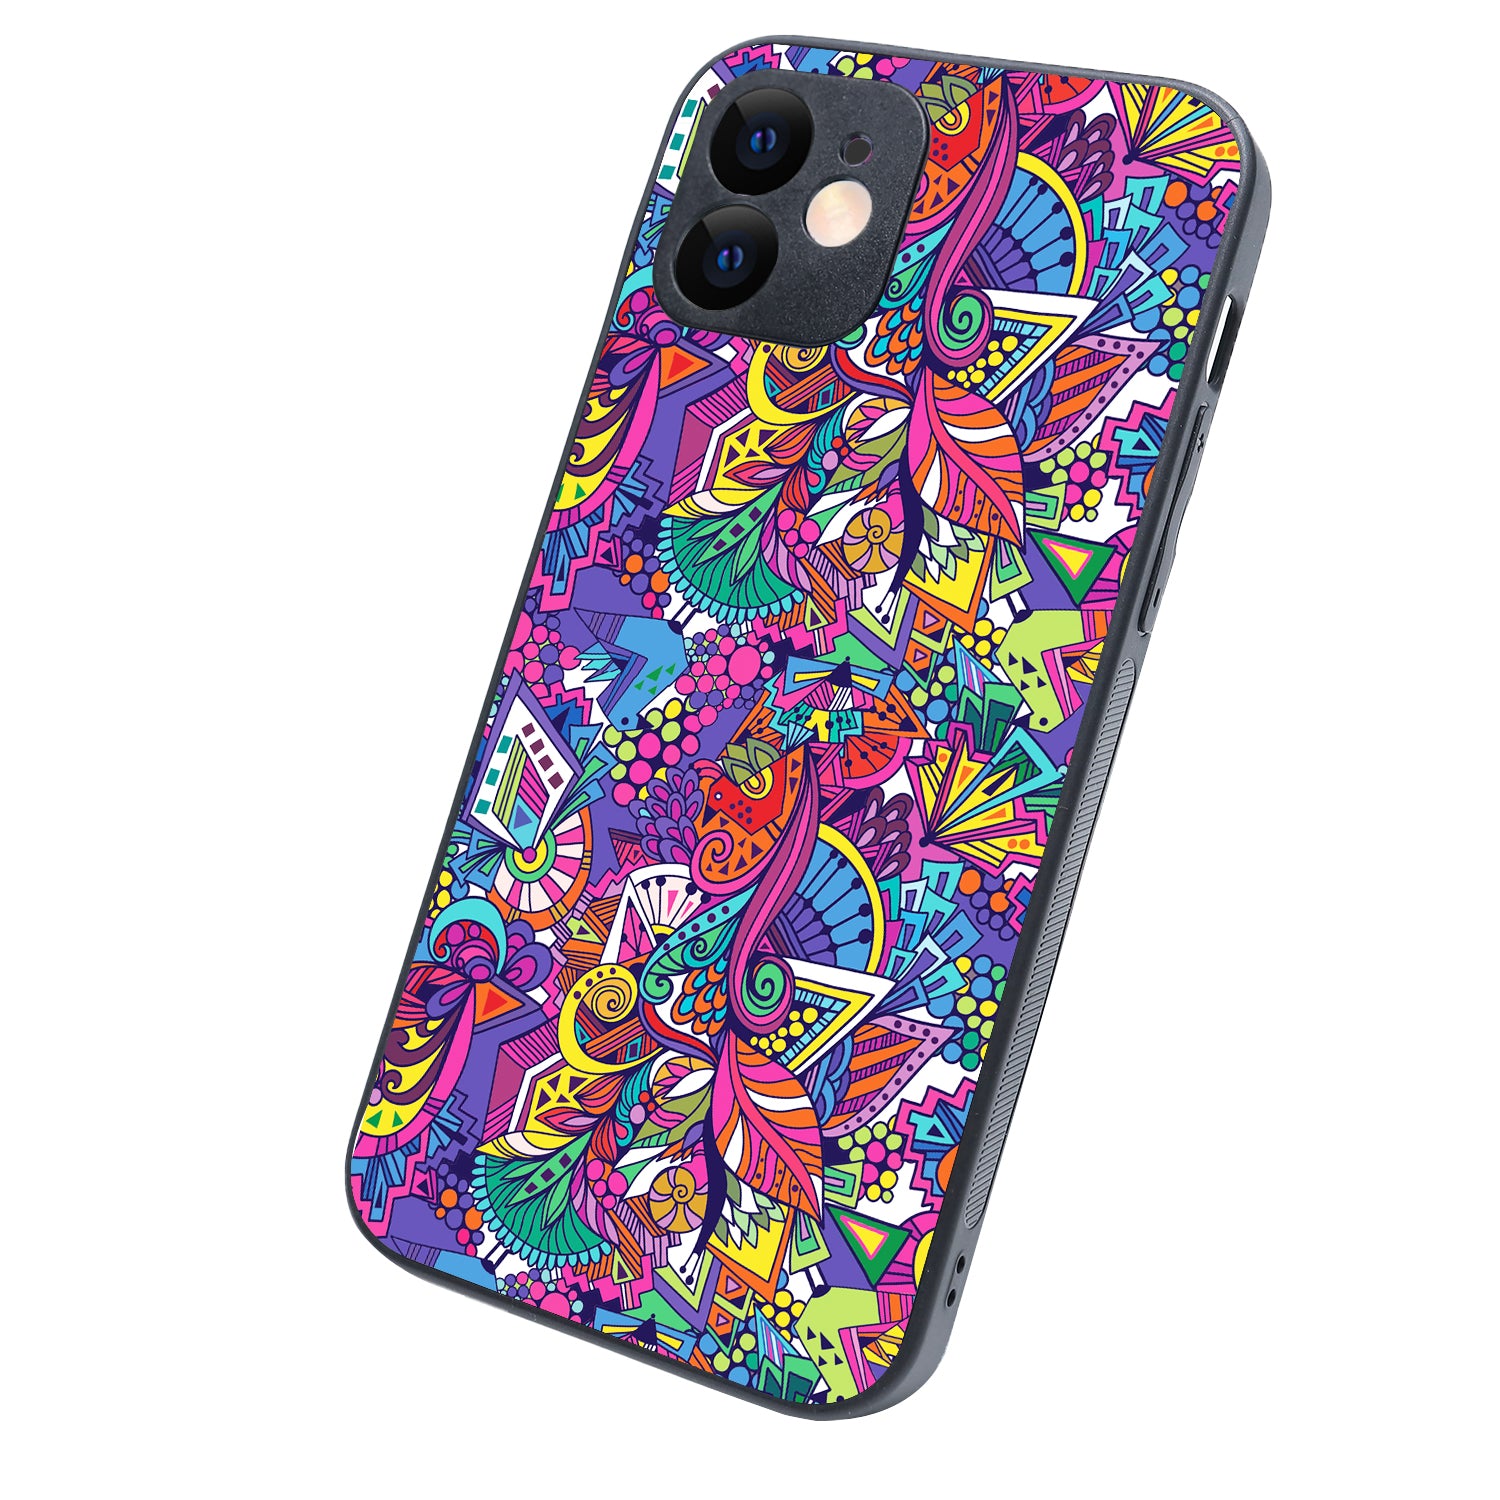 Colourful Doodle iPhone 12 Case